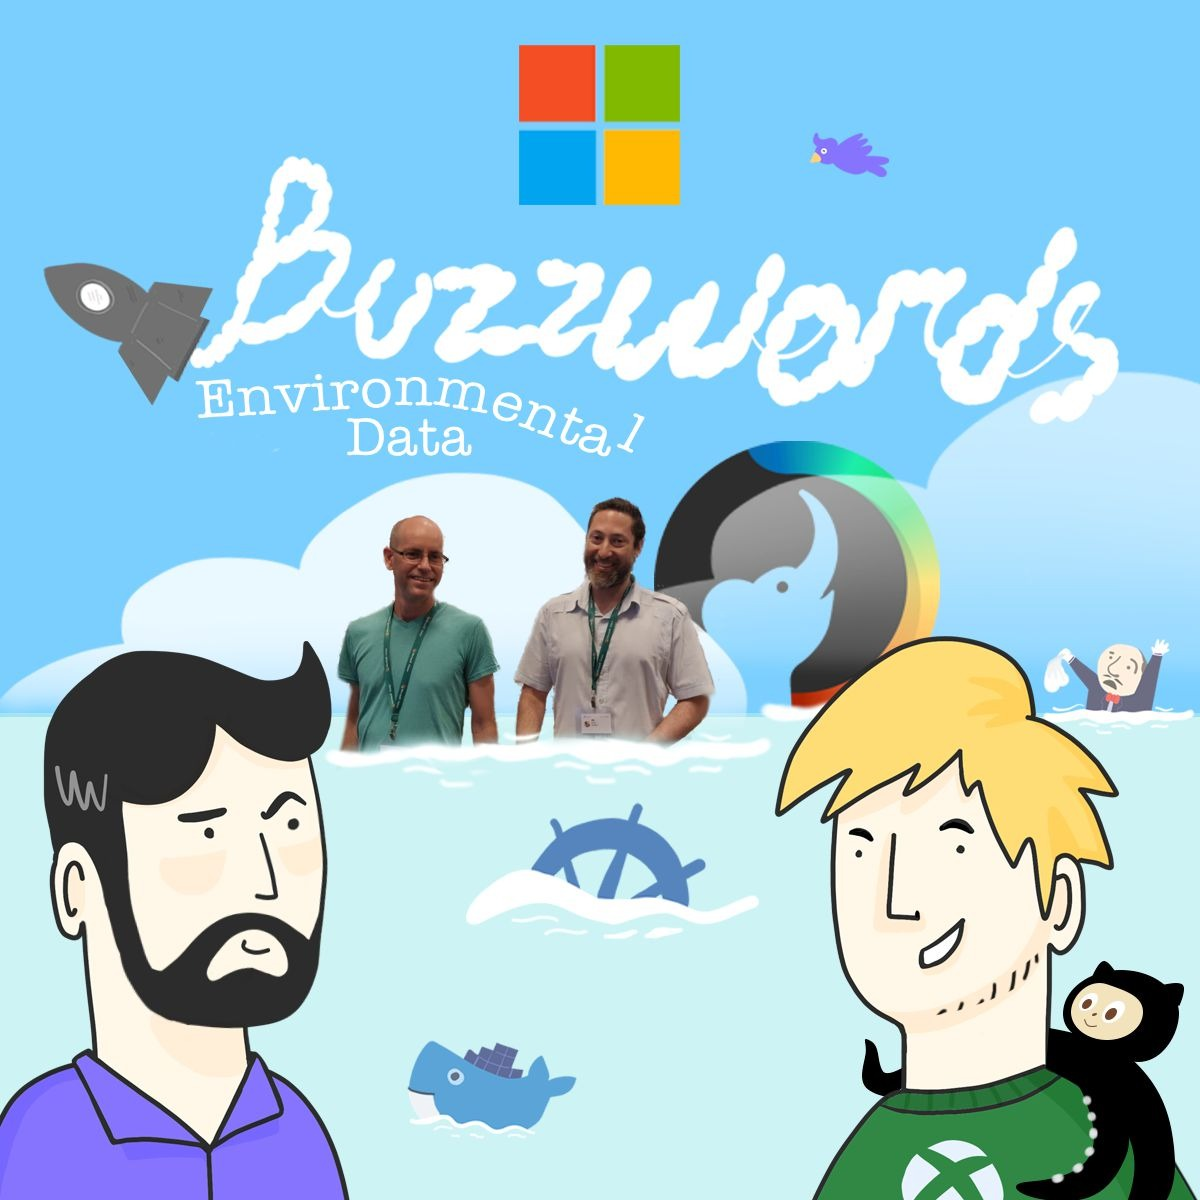 Buzzwords - איכות הסביבה ומידע סביבתי